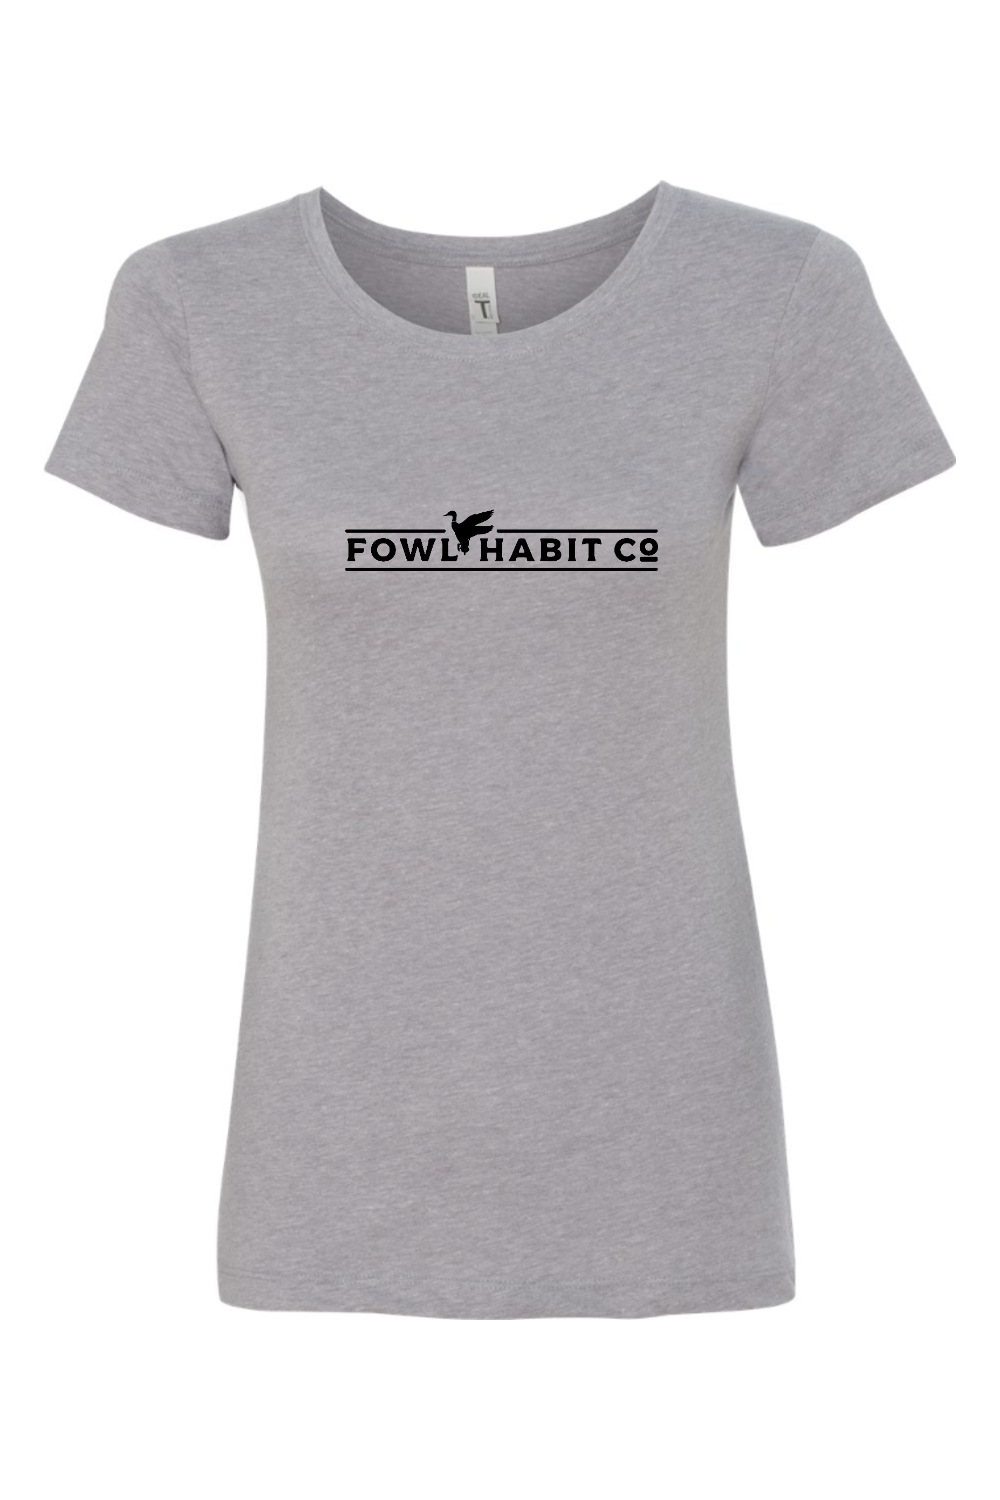 Womens "The Brand" T-Shirt - Fowl Habit Co.